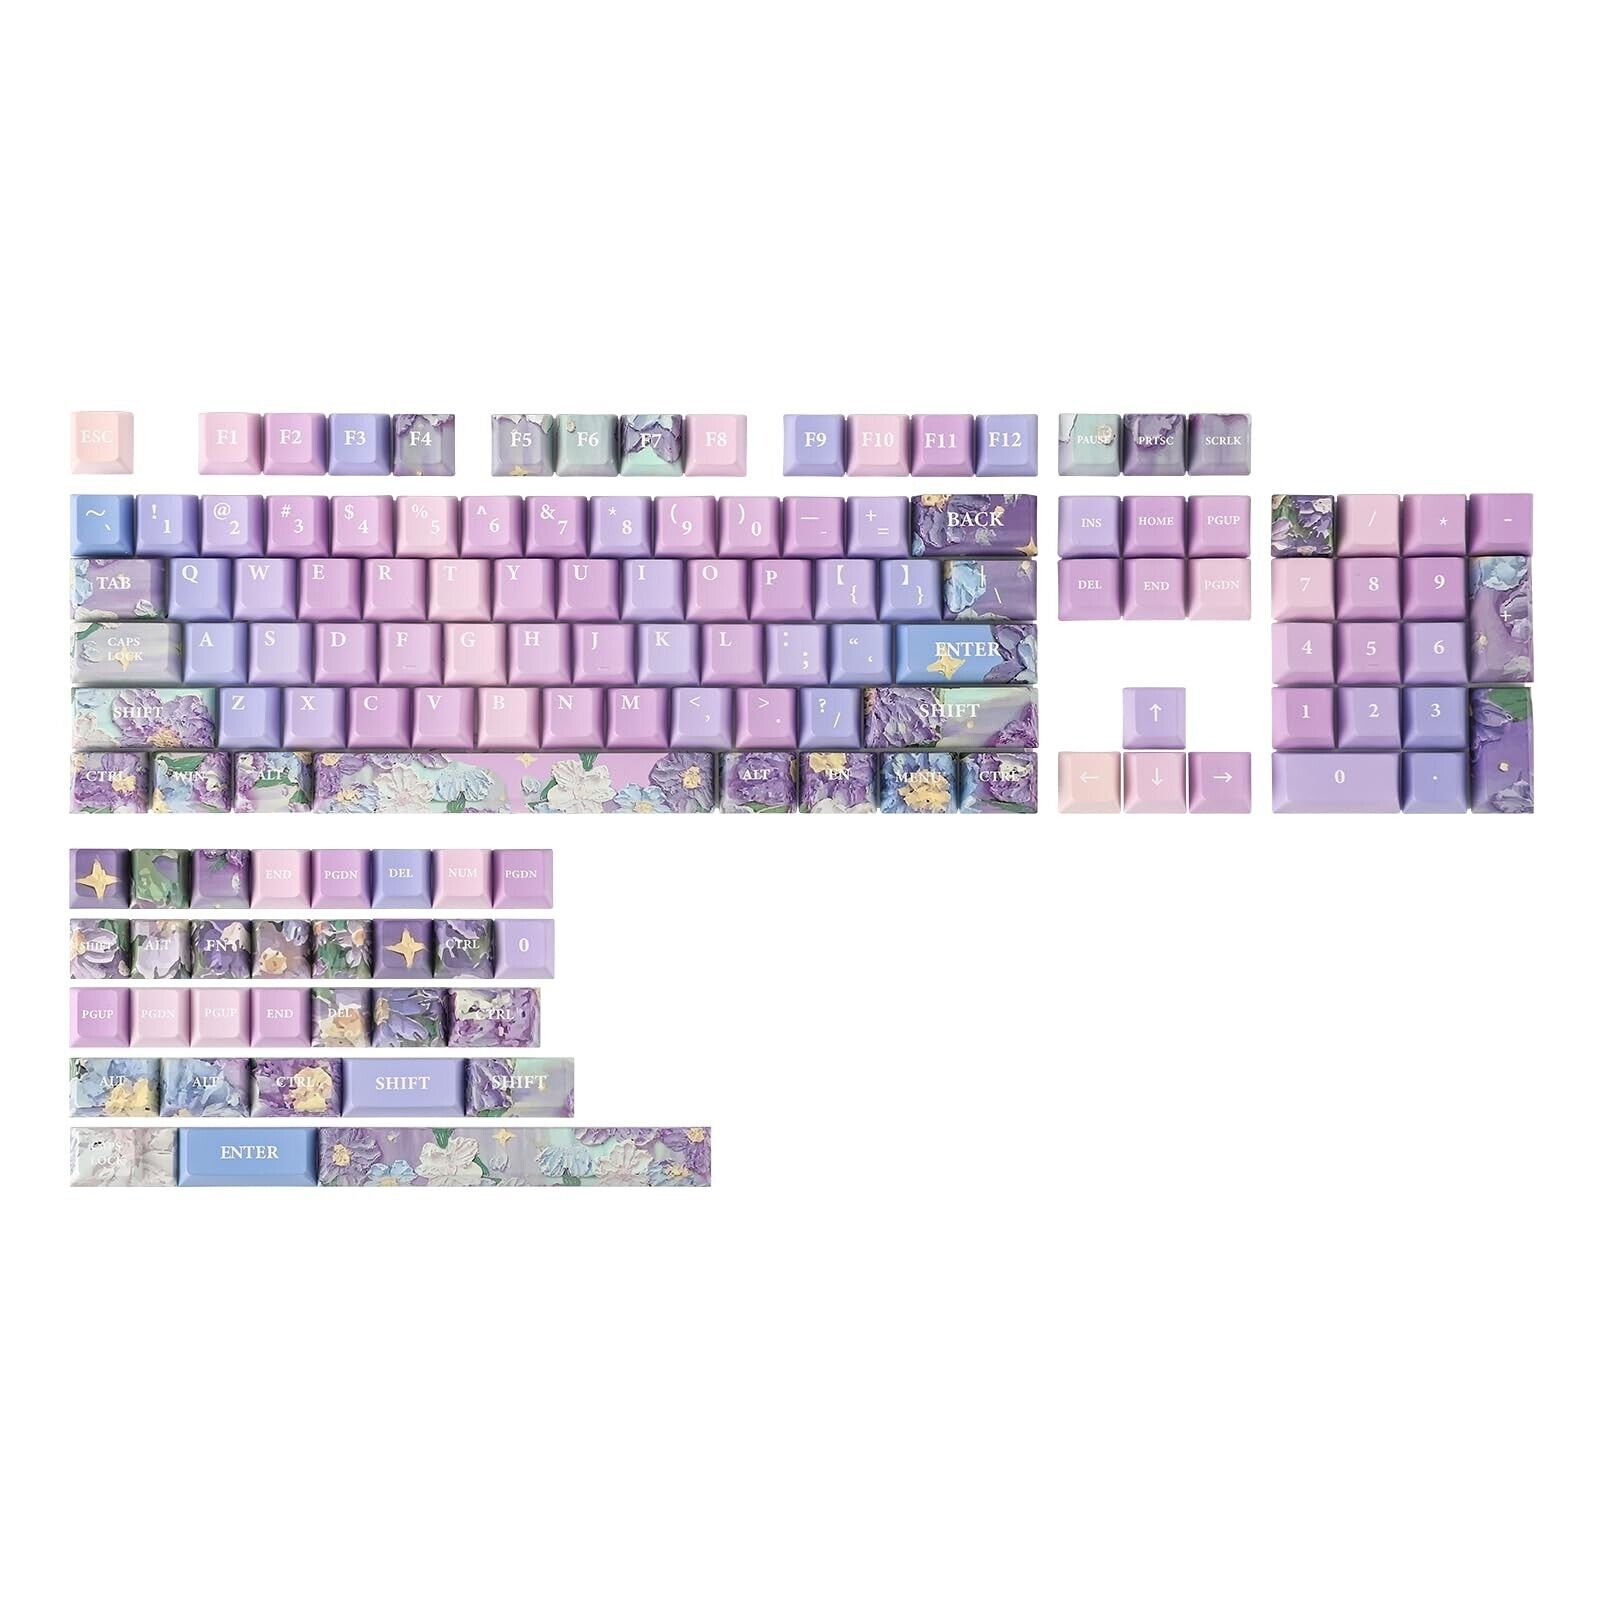 KiiBOOM Violet Cherry Profile Keycaps Set, 133 Keys PBT Custom Keycaps for AN...